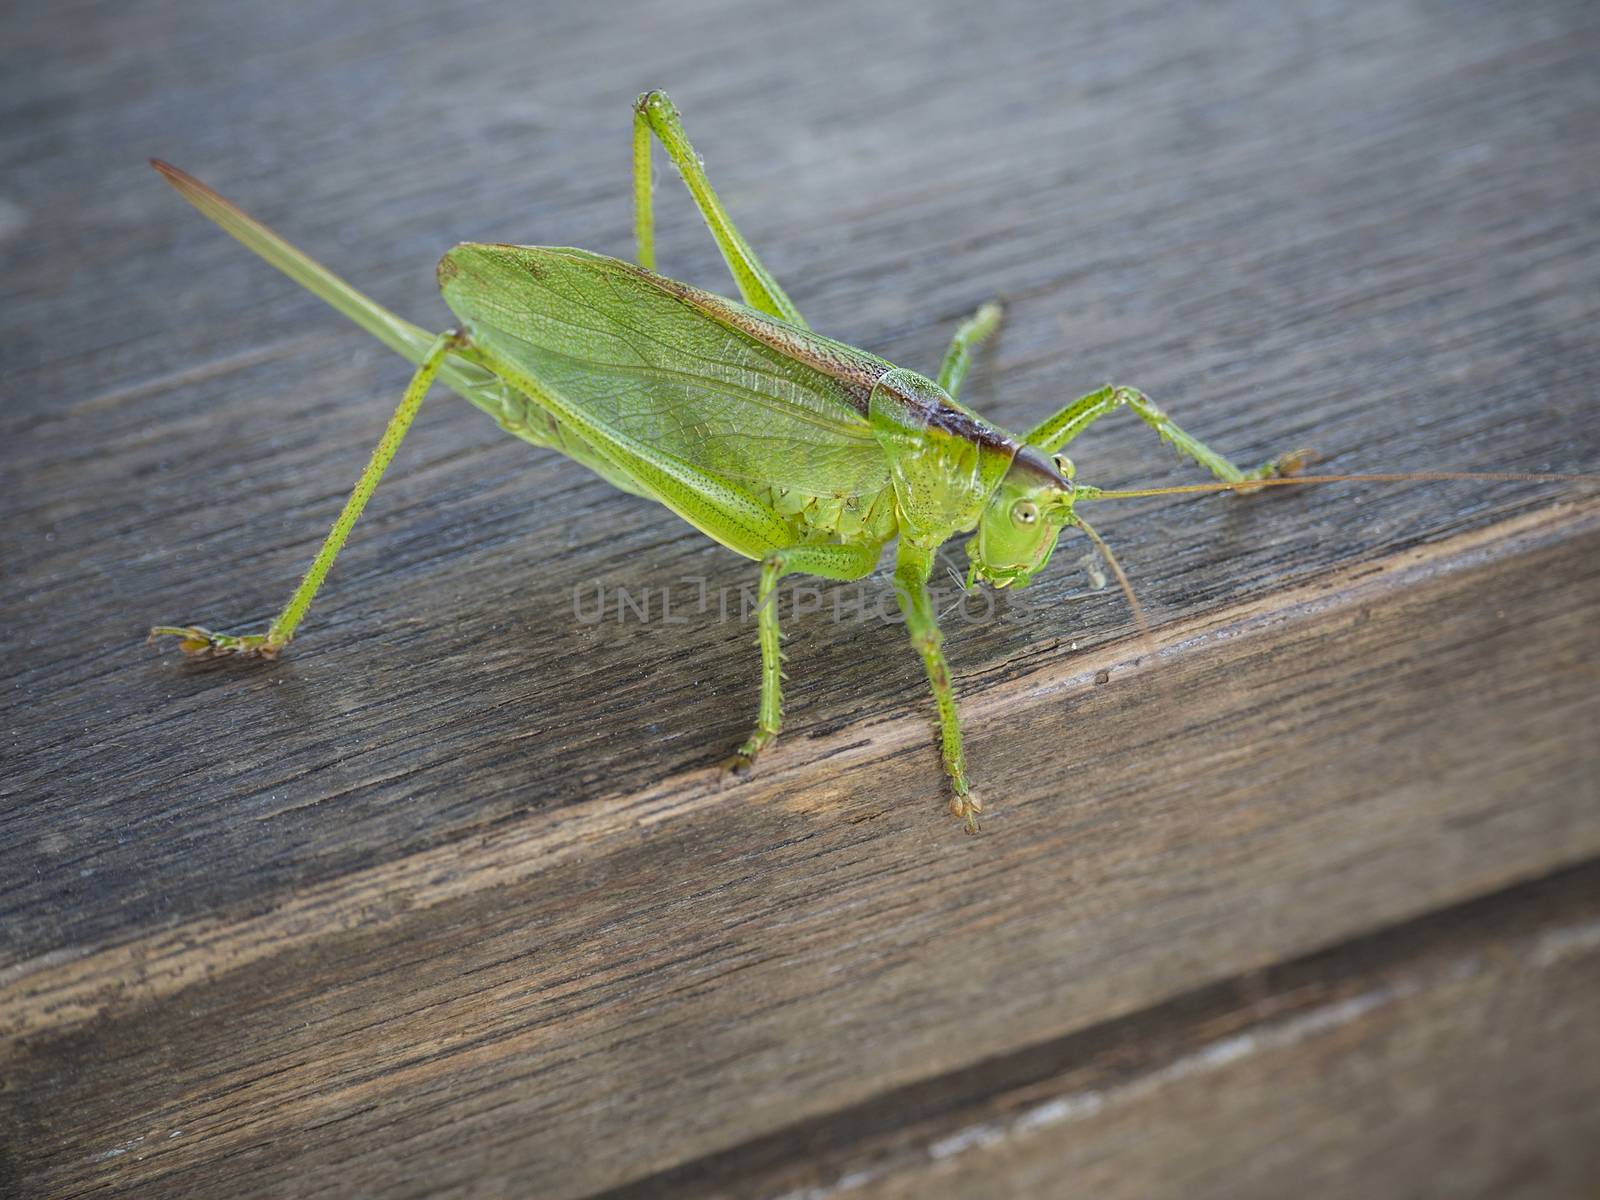 macro close up big green locust grasshopper on wooden table by Henkeova